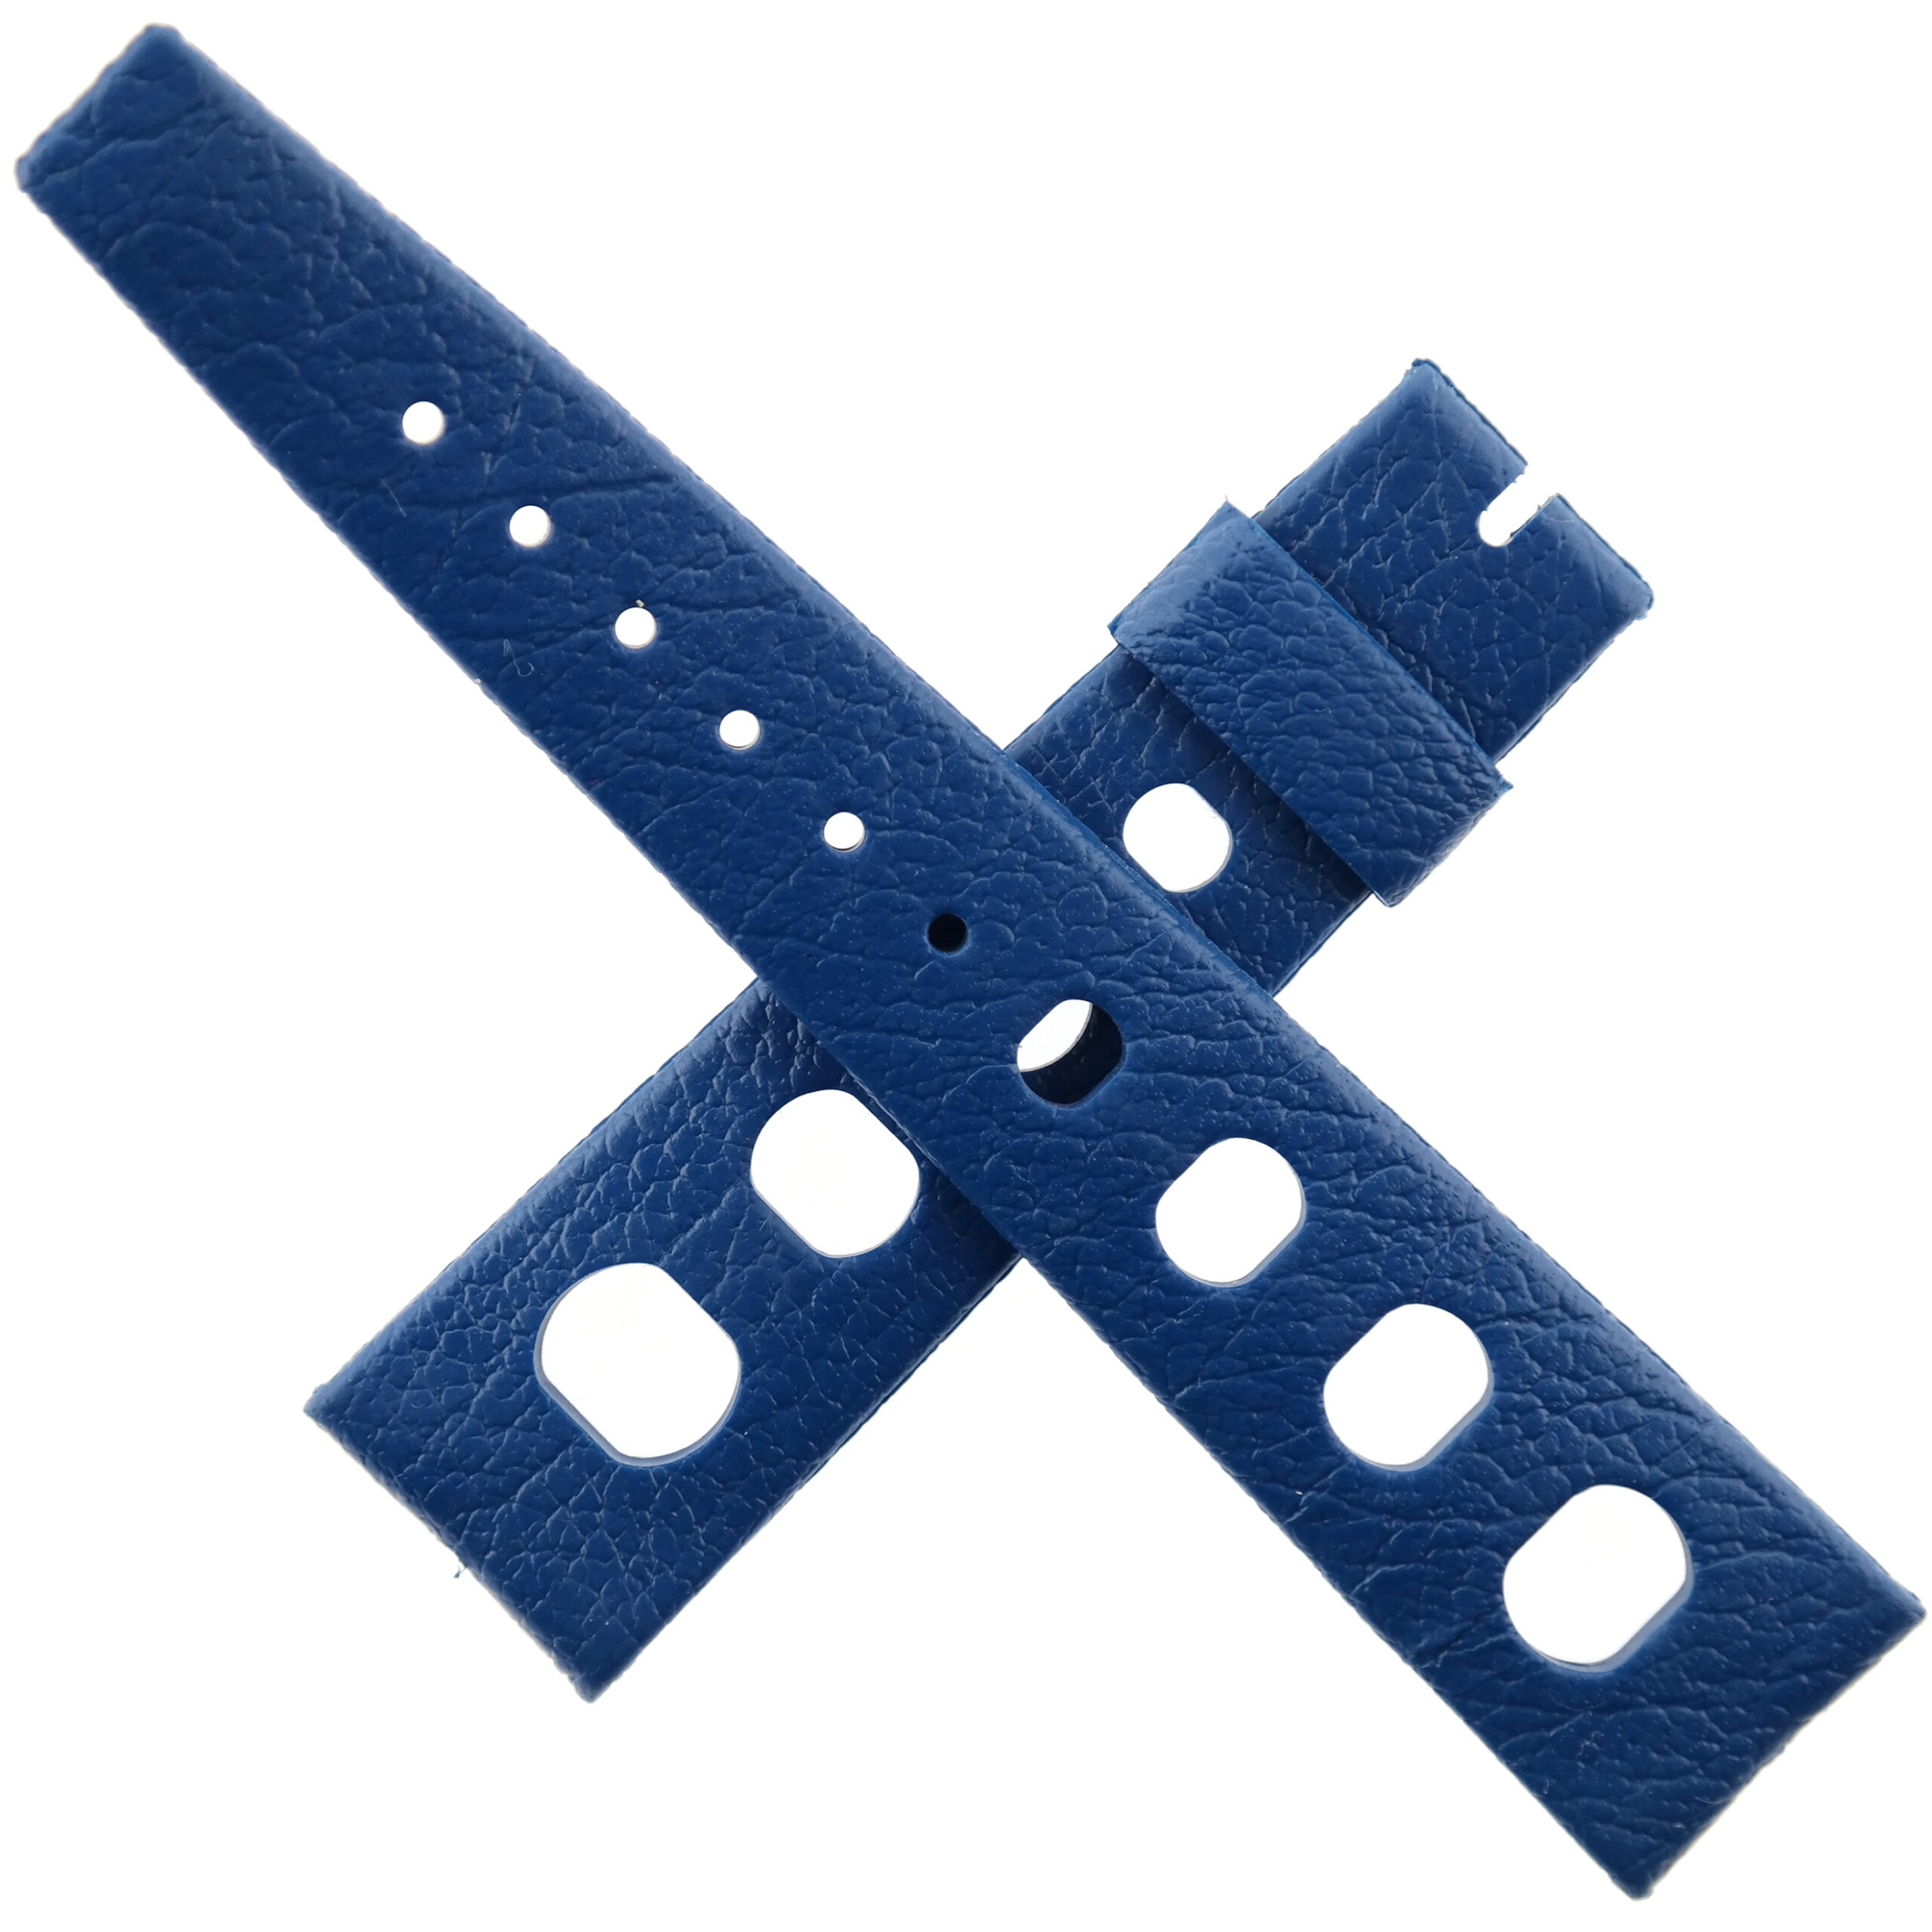 Vintage BESTFIT TROPIC SPORT Watch Strap - 23320 - 20 mm - Blue - Swiss Made